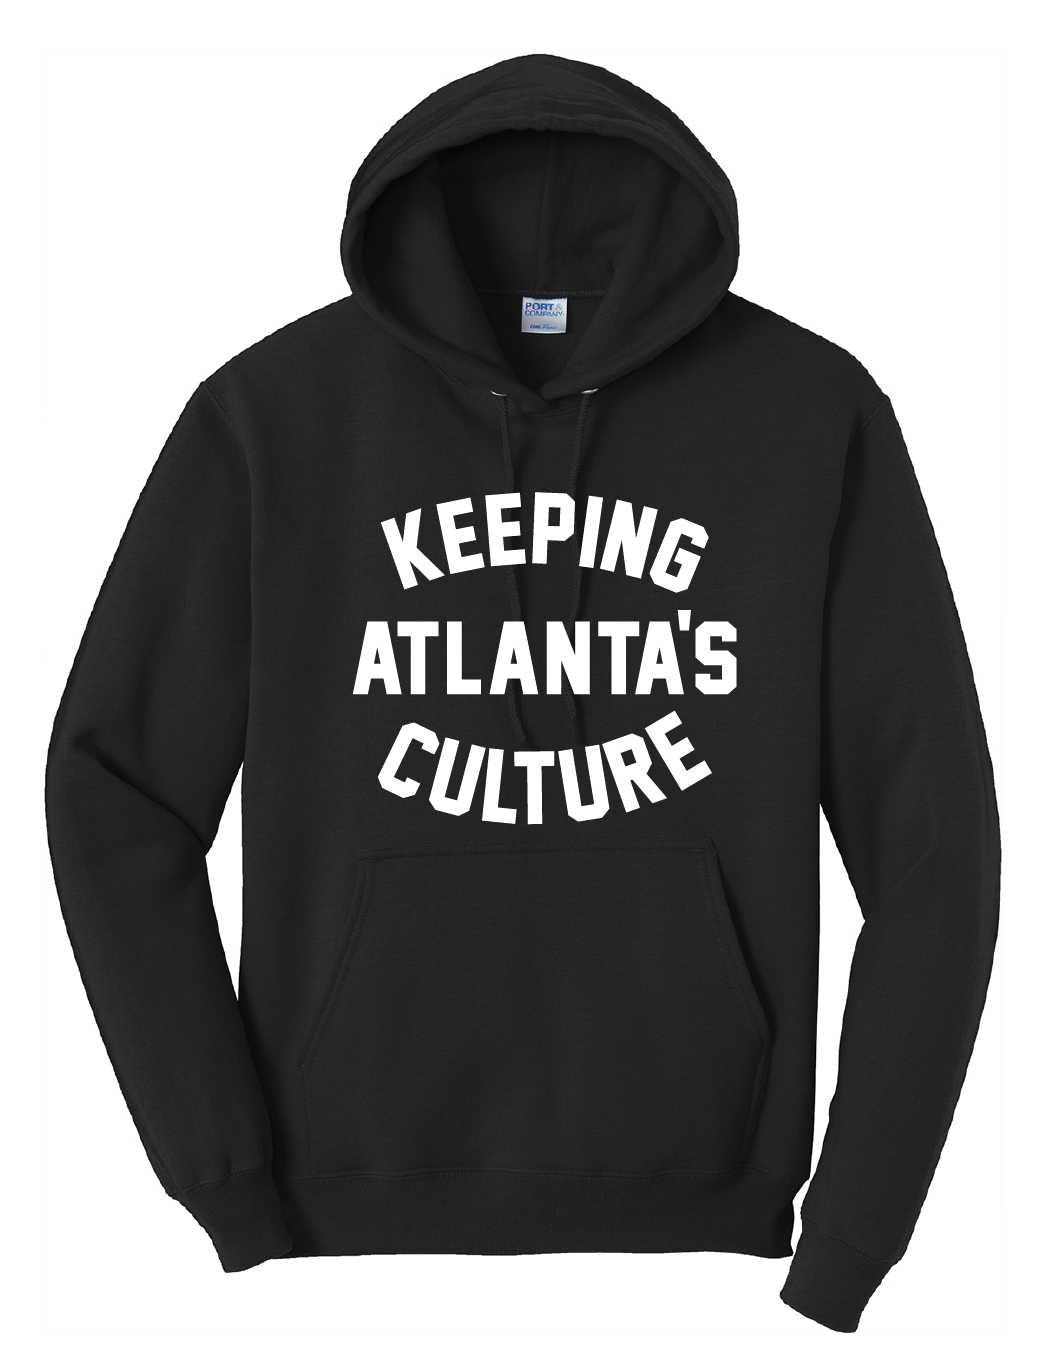 KAC Culture Hooded Sweatshirt